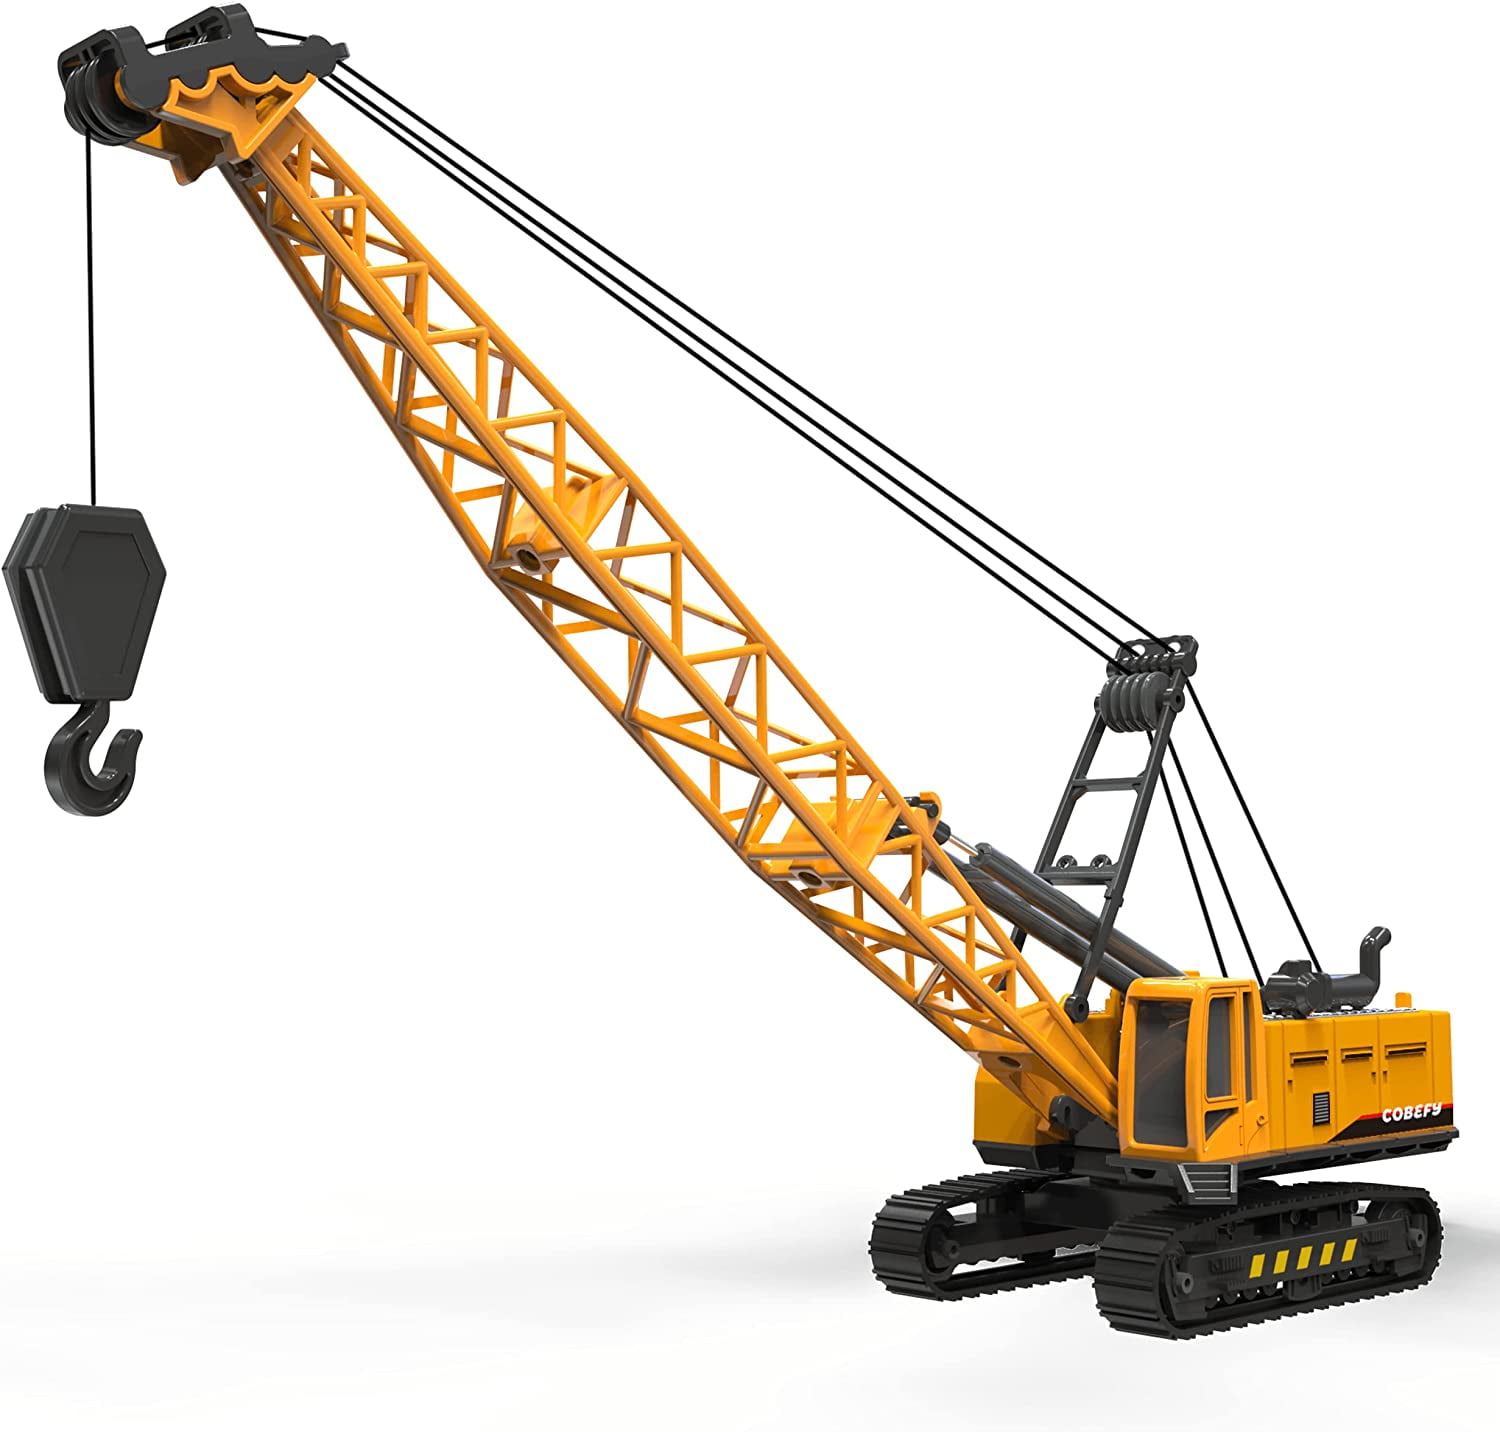 Crane Toy Construction Toy Truck, Diecast Construction Vehicles